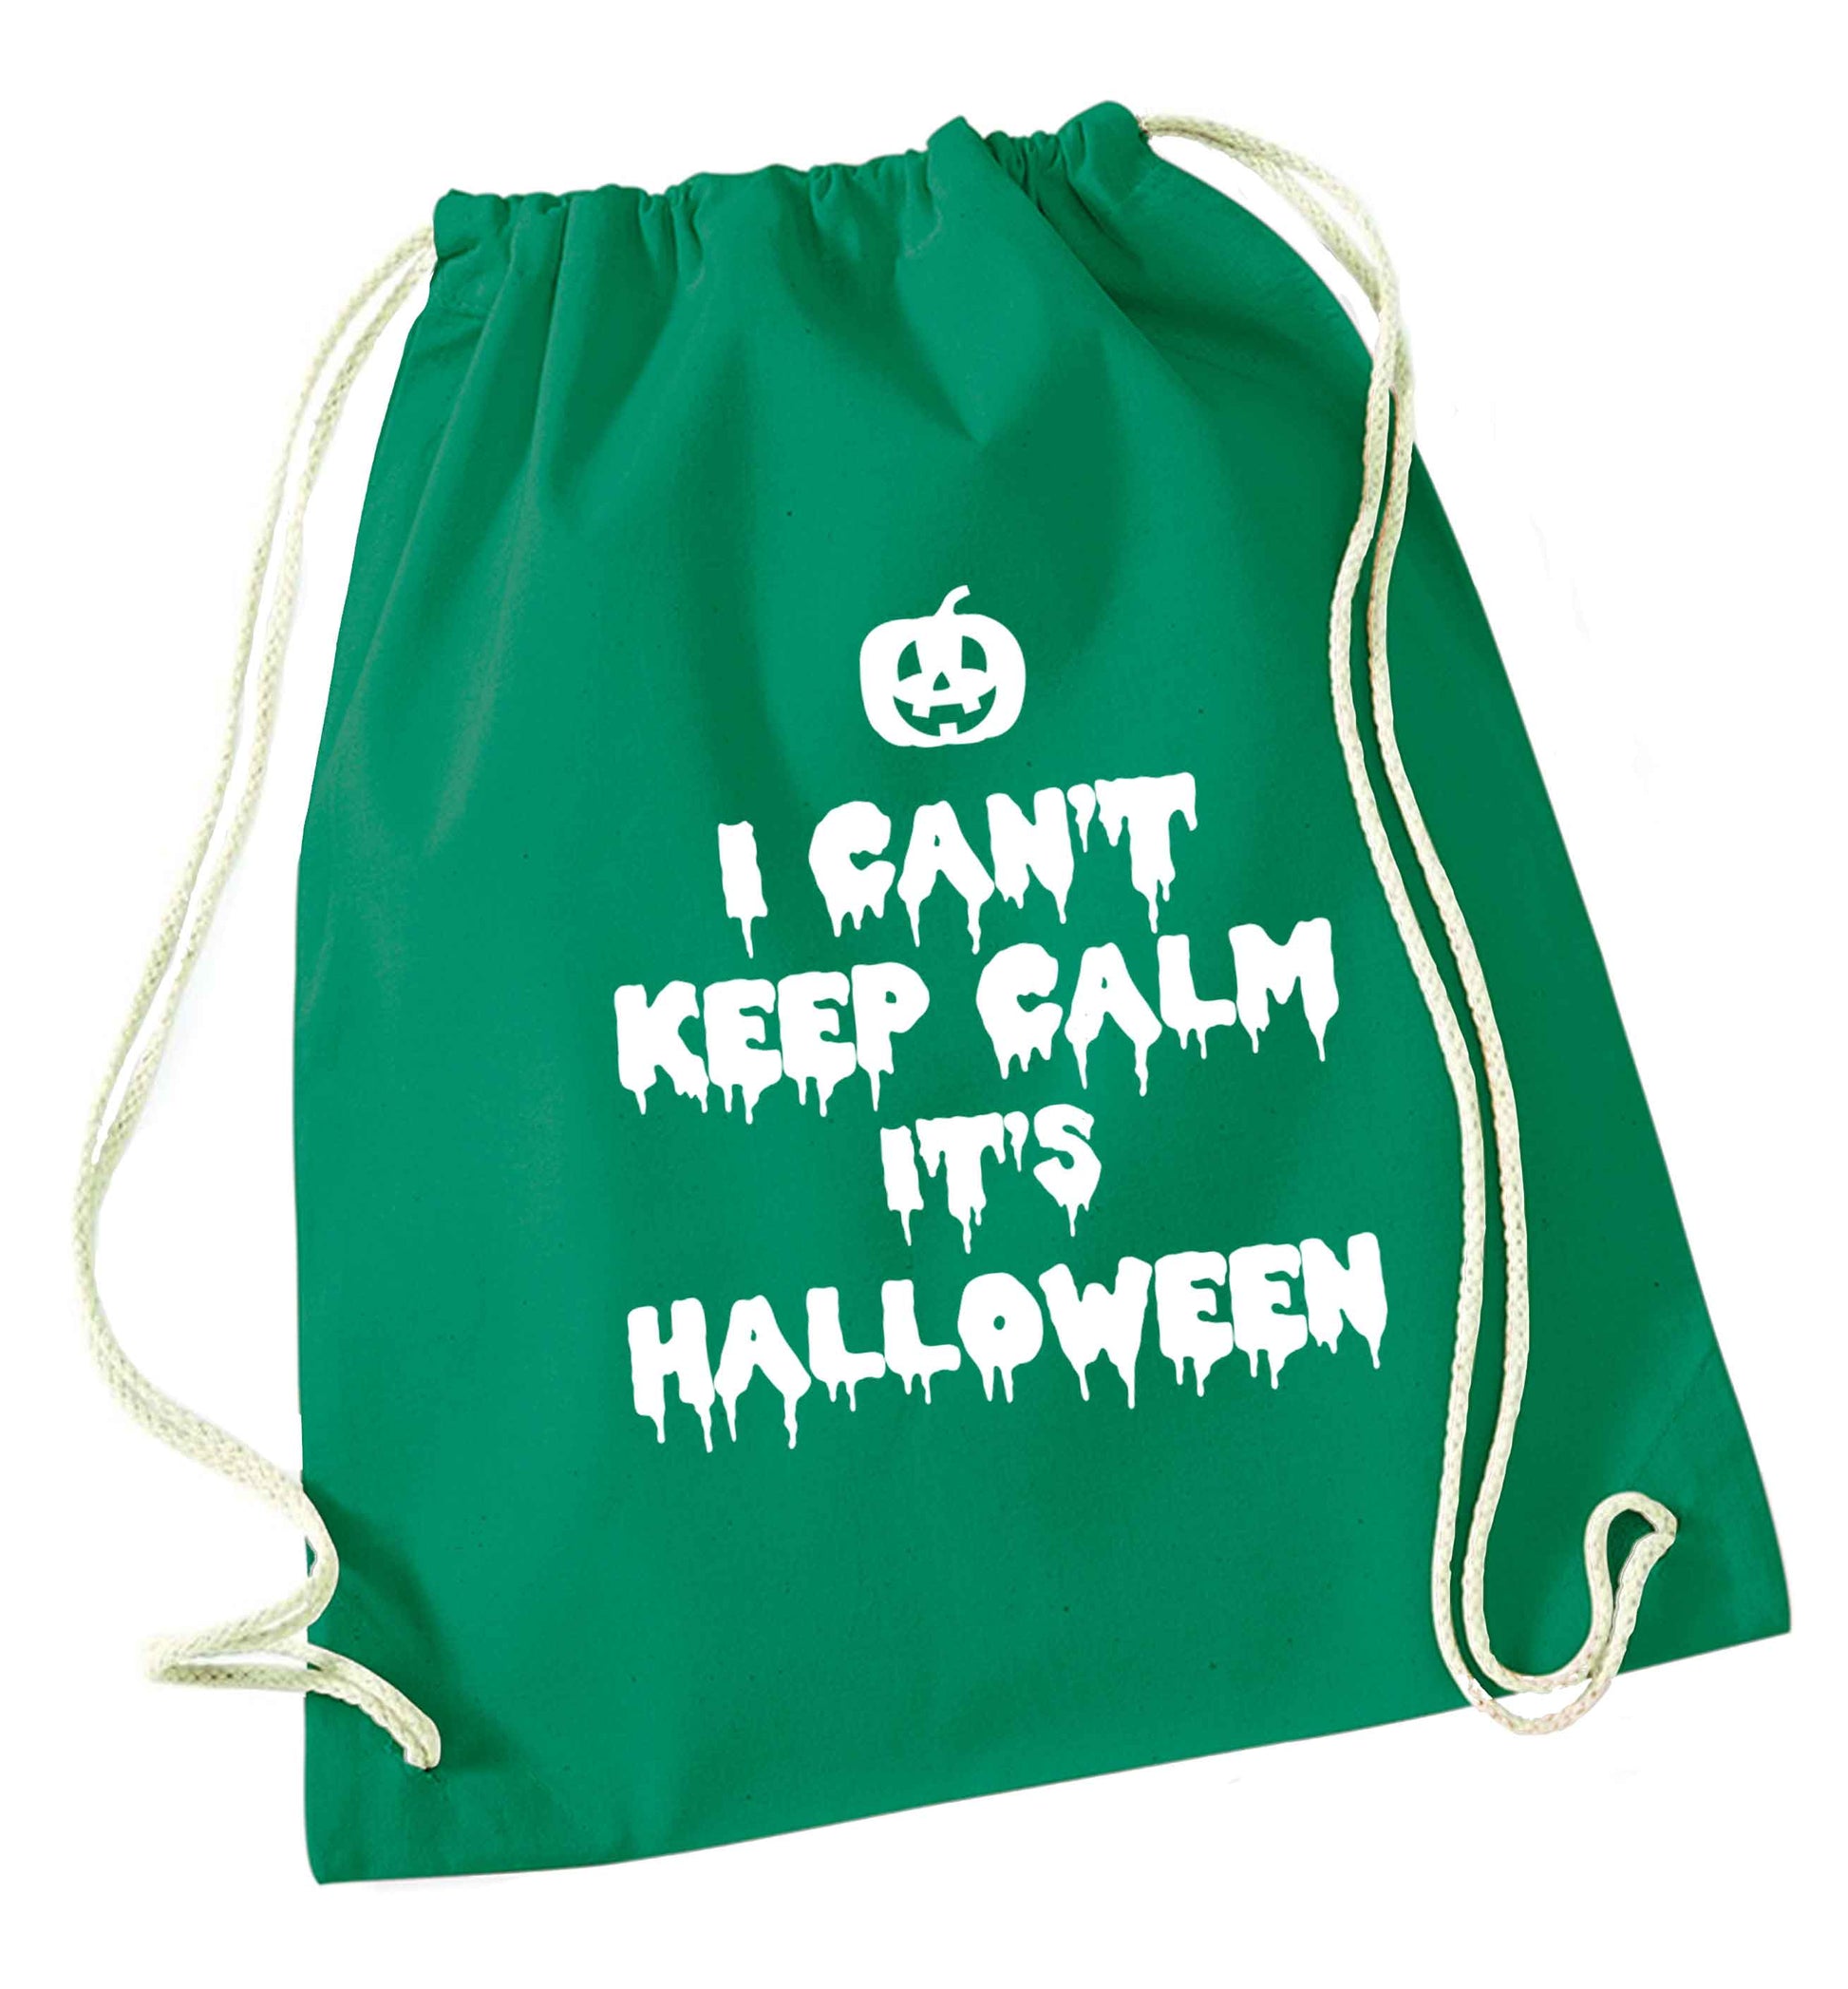 I can't keep calm it's halloween green drawstring bag